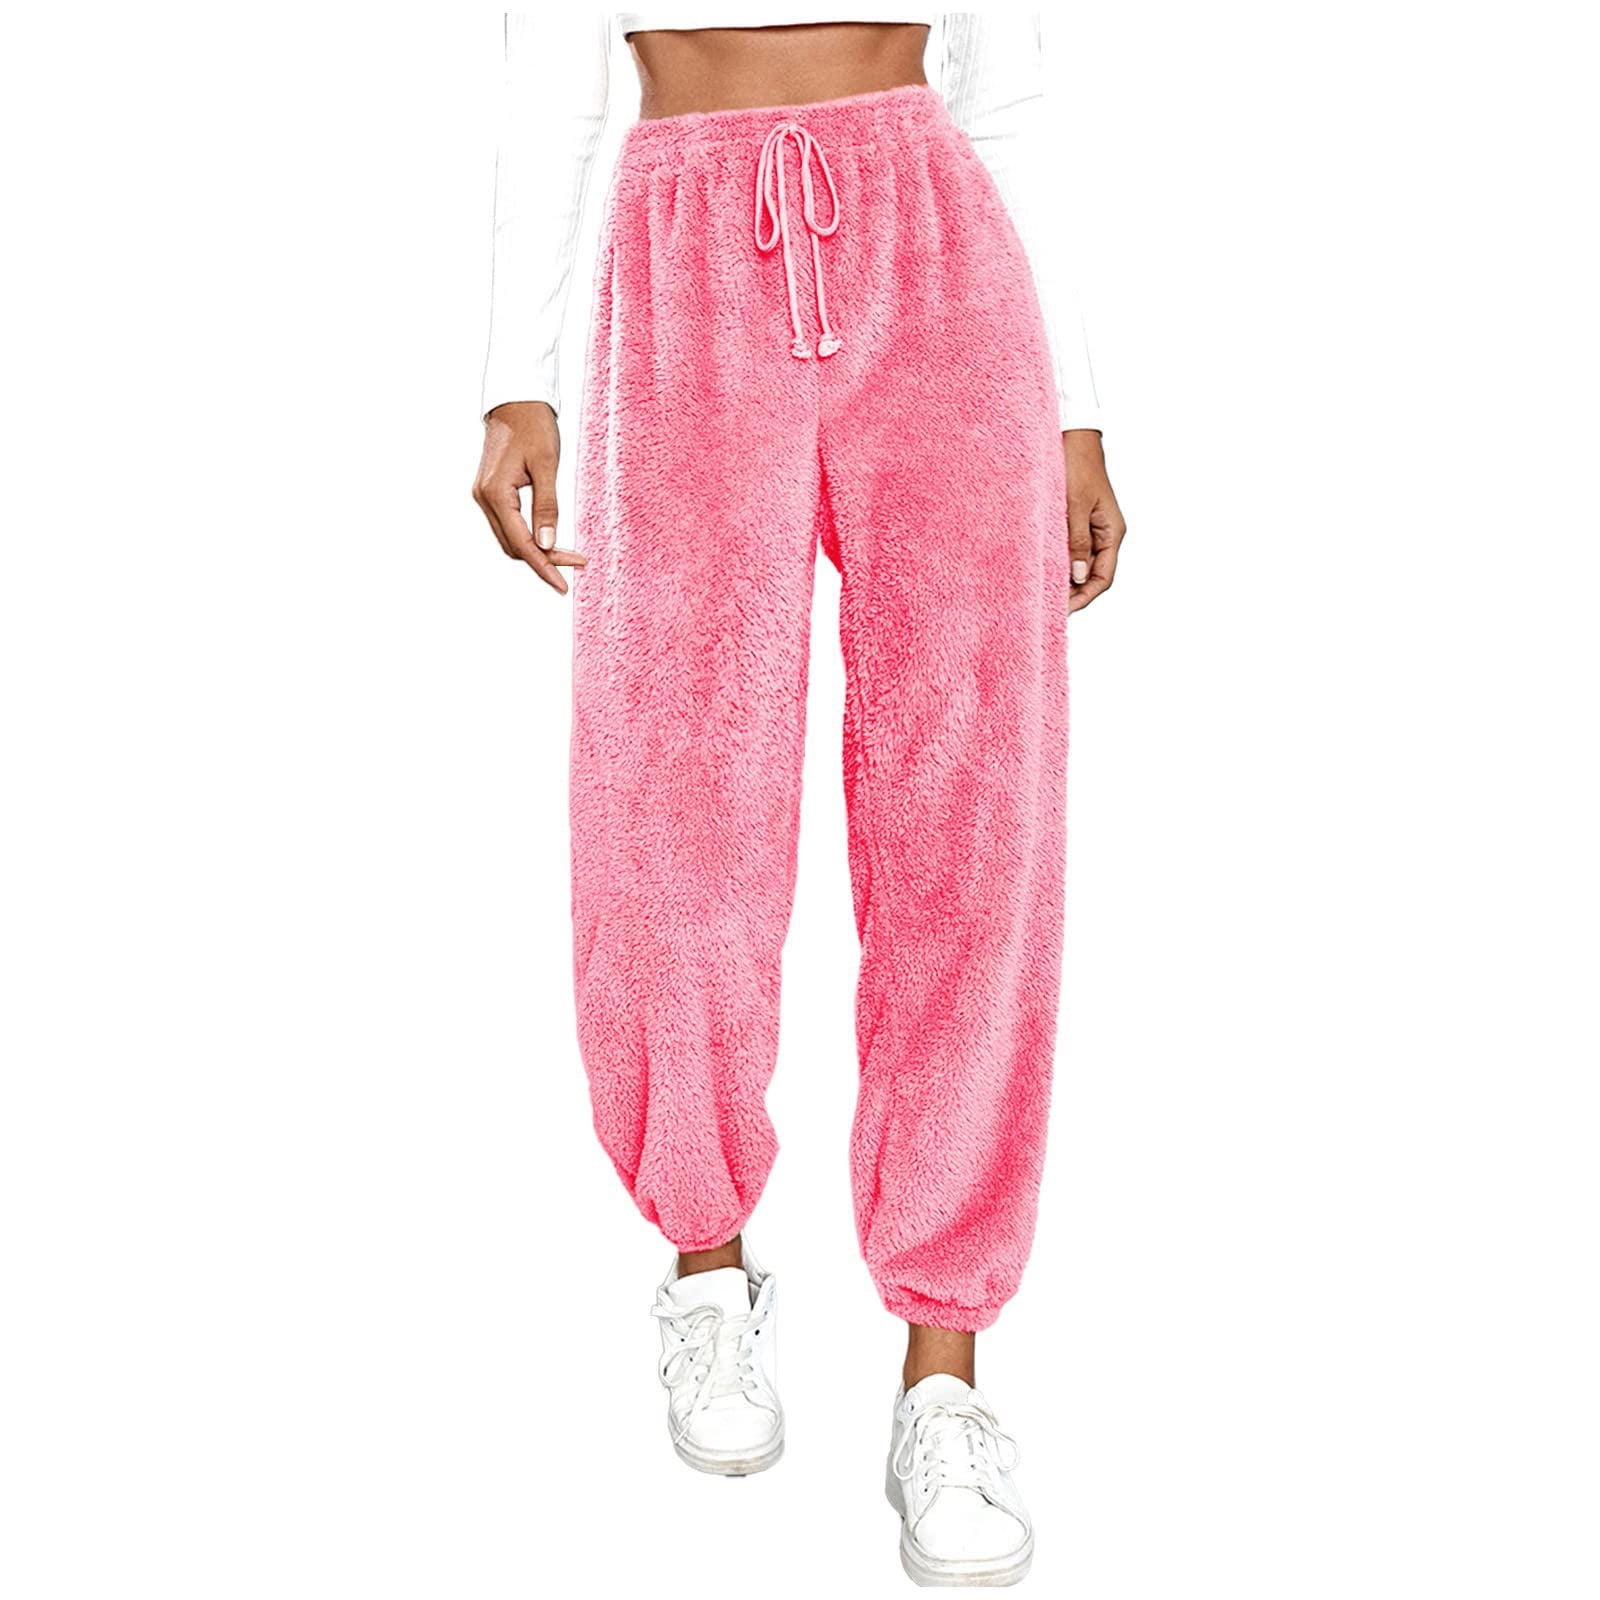 HAPIMO Sales Womens Fuzzy Fleece Pants Warm Cozy Pjs Bottoms Fleece  Sweatpants Pants Fluffy Sleepwear with Drawstring Hot Pink XXXXXL